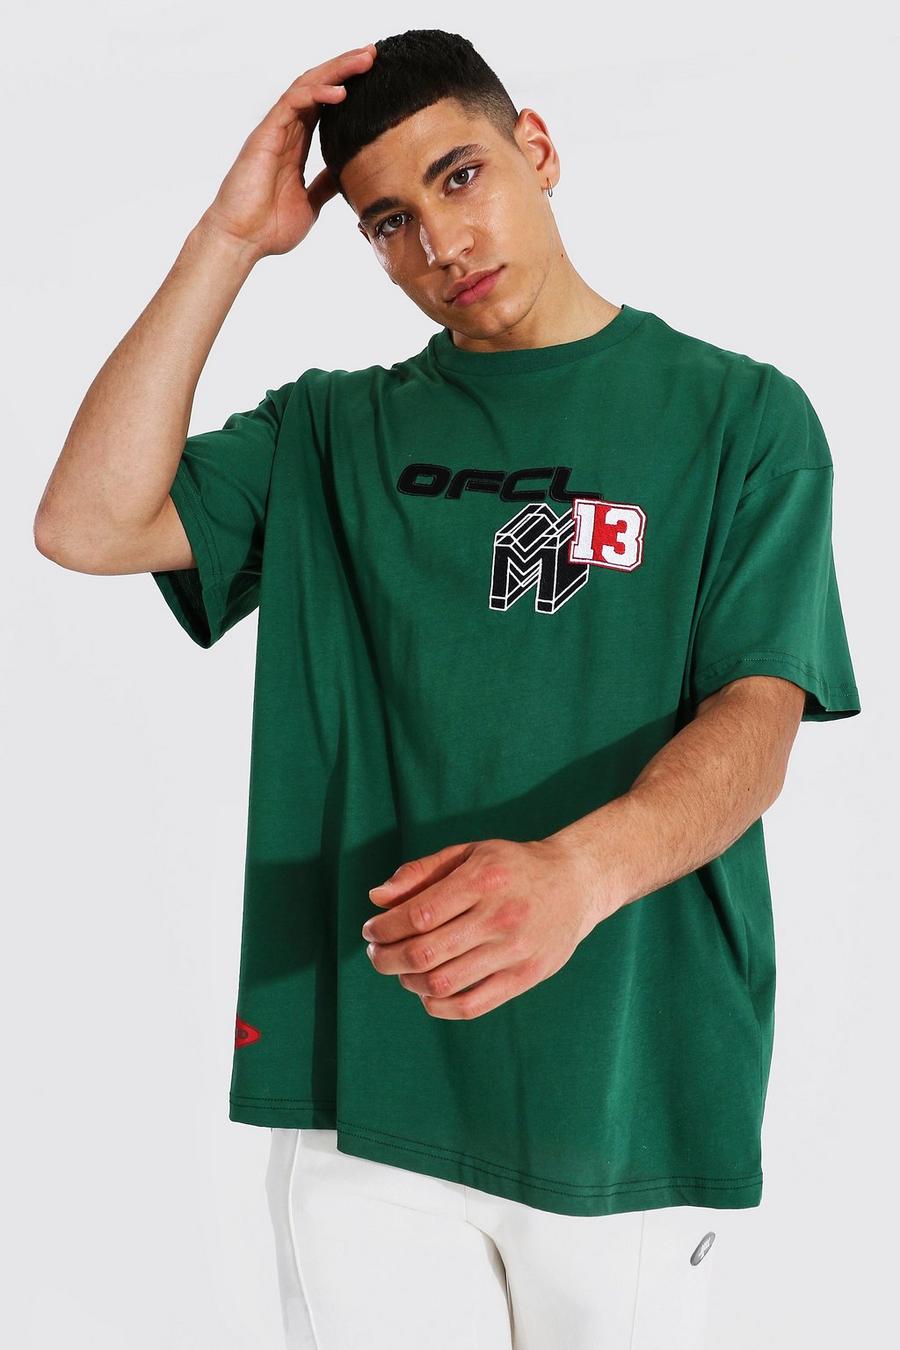 T-shirt oversize con scritta Ofcl 13 in stile varsity, Verde gerde